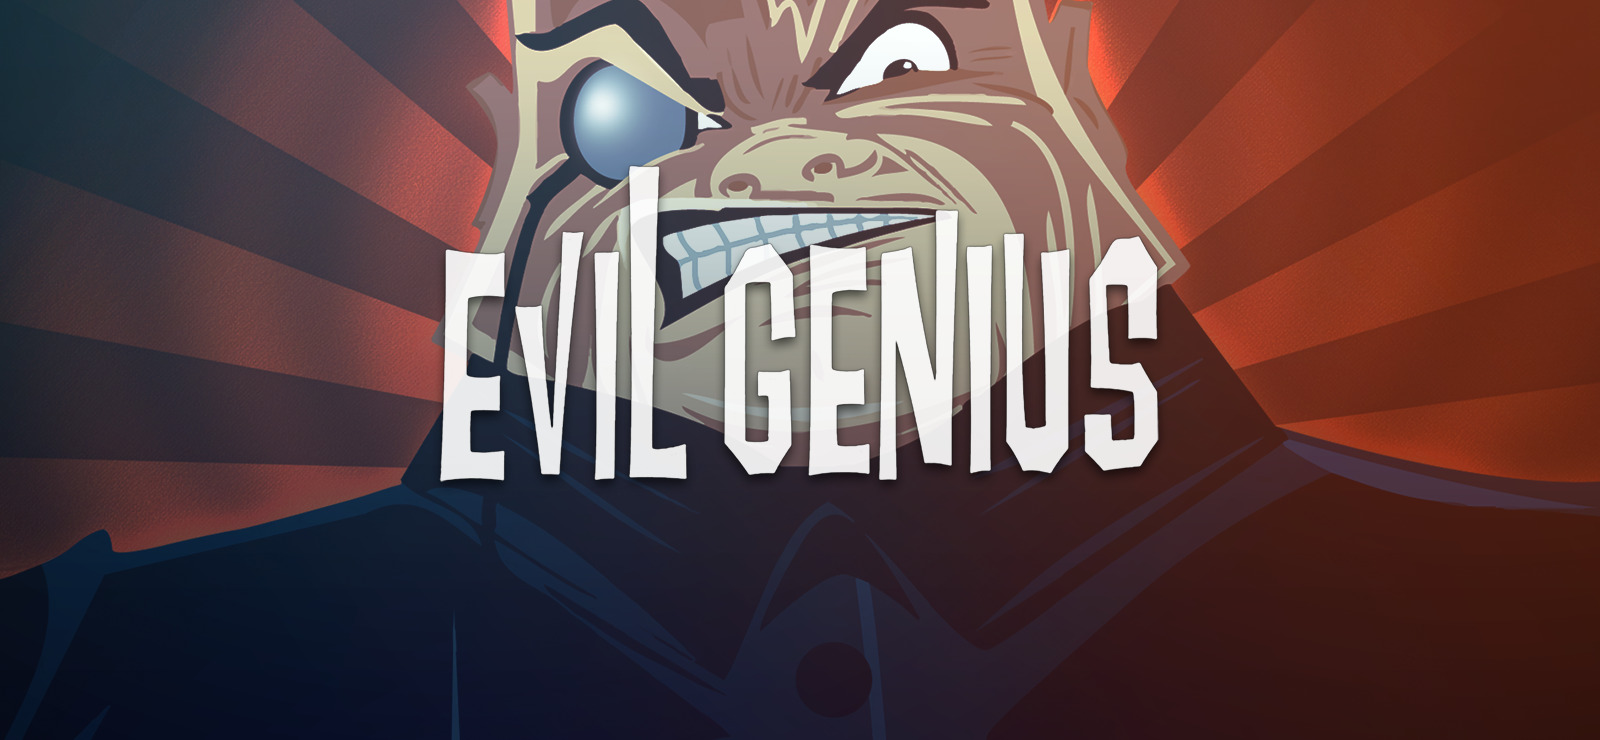 evil genius Archives - The Professional Creative